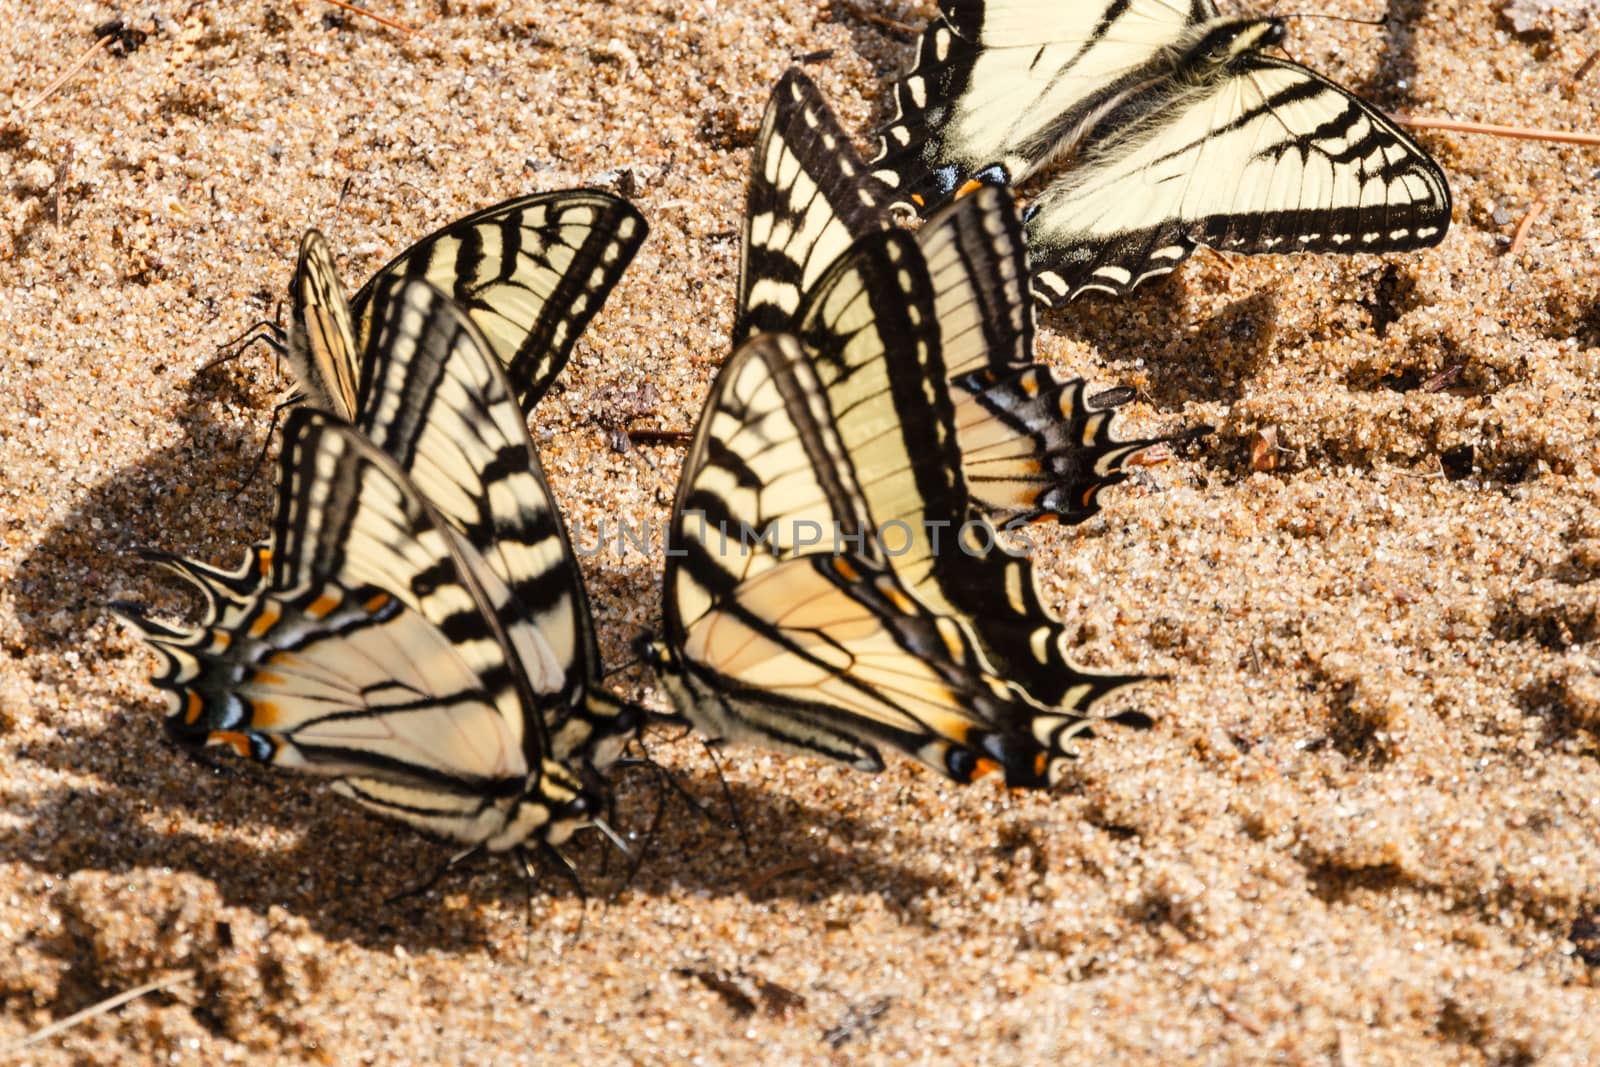 Thirsty butterflies by lprising